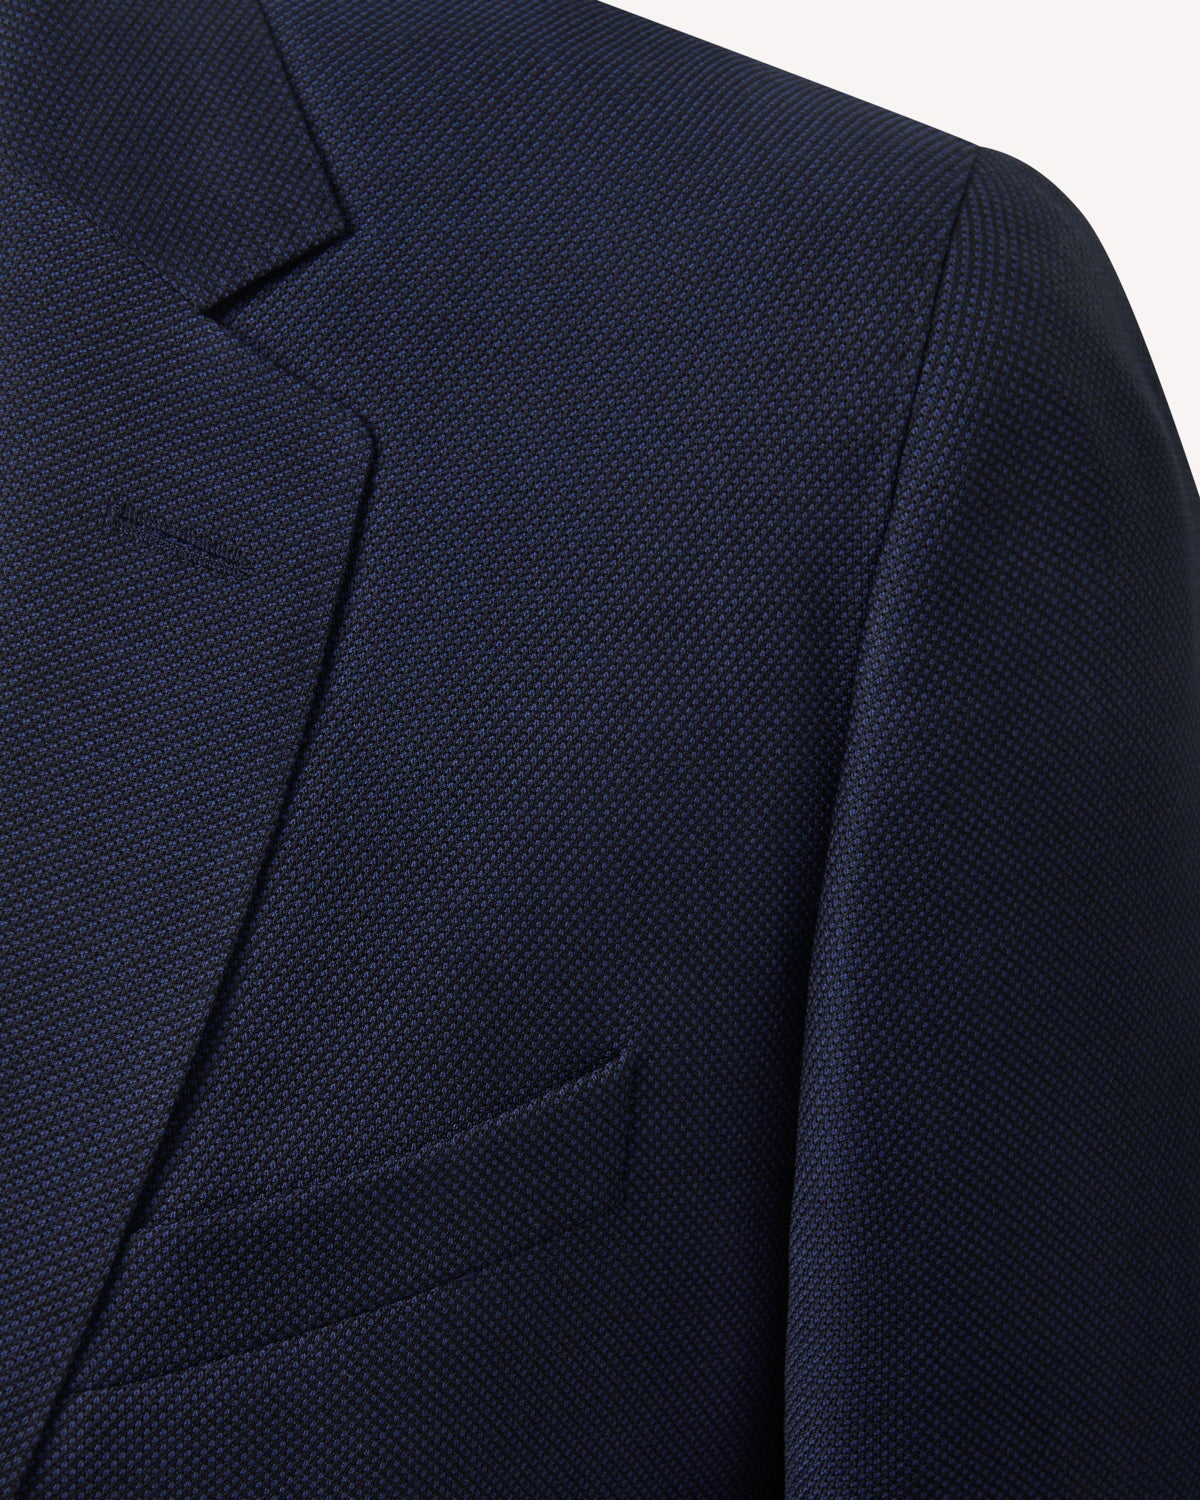 Kilgour Savile Row Tailoring SB1 KG Single Breasted Navy Birdseye Suit